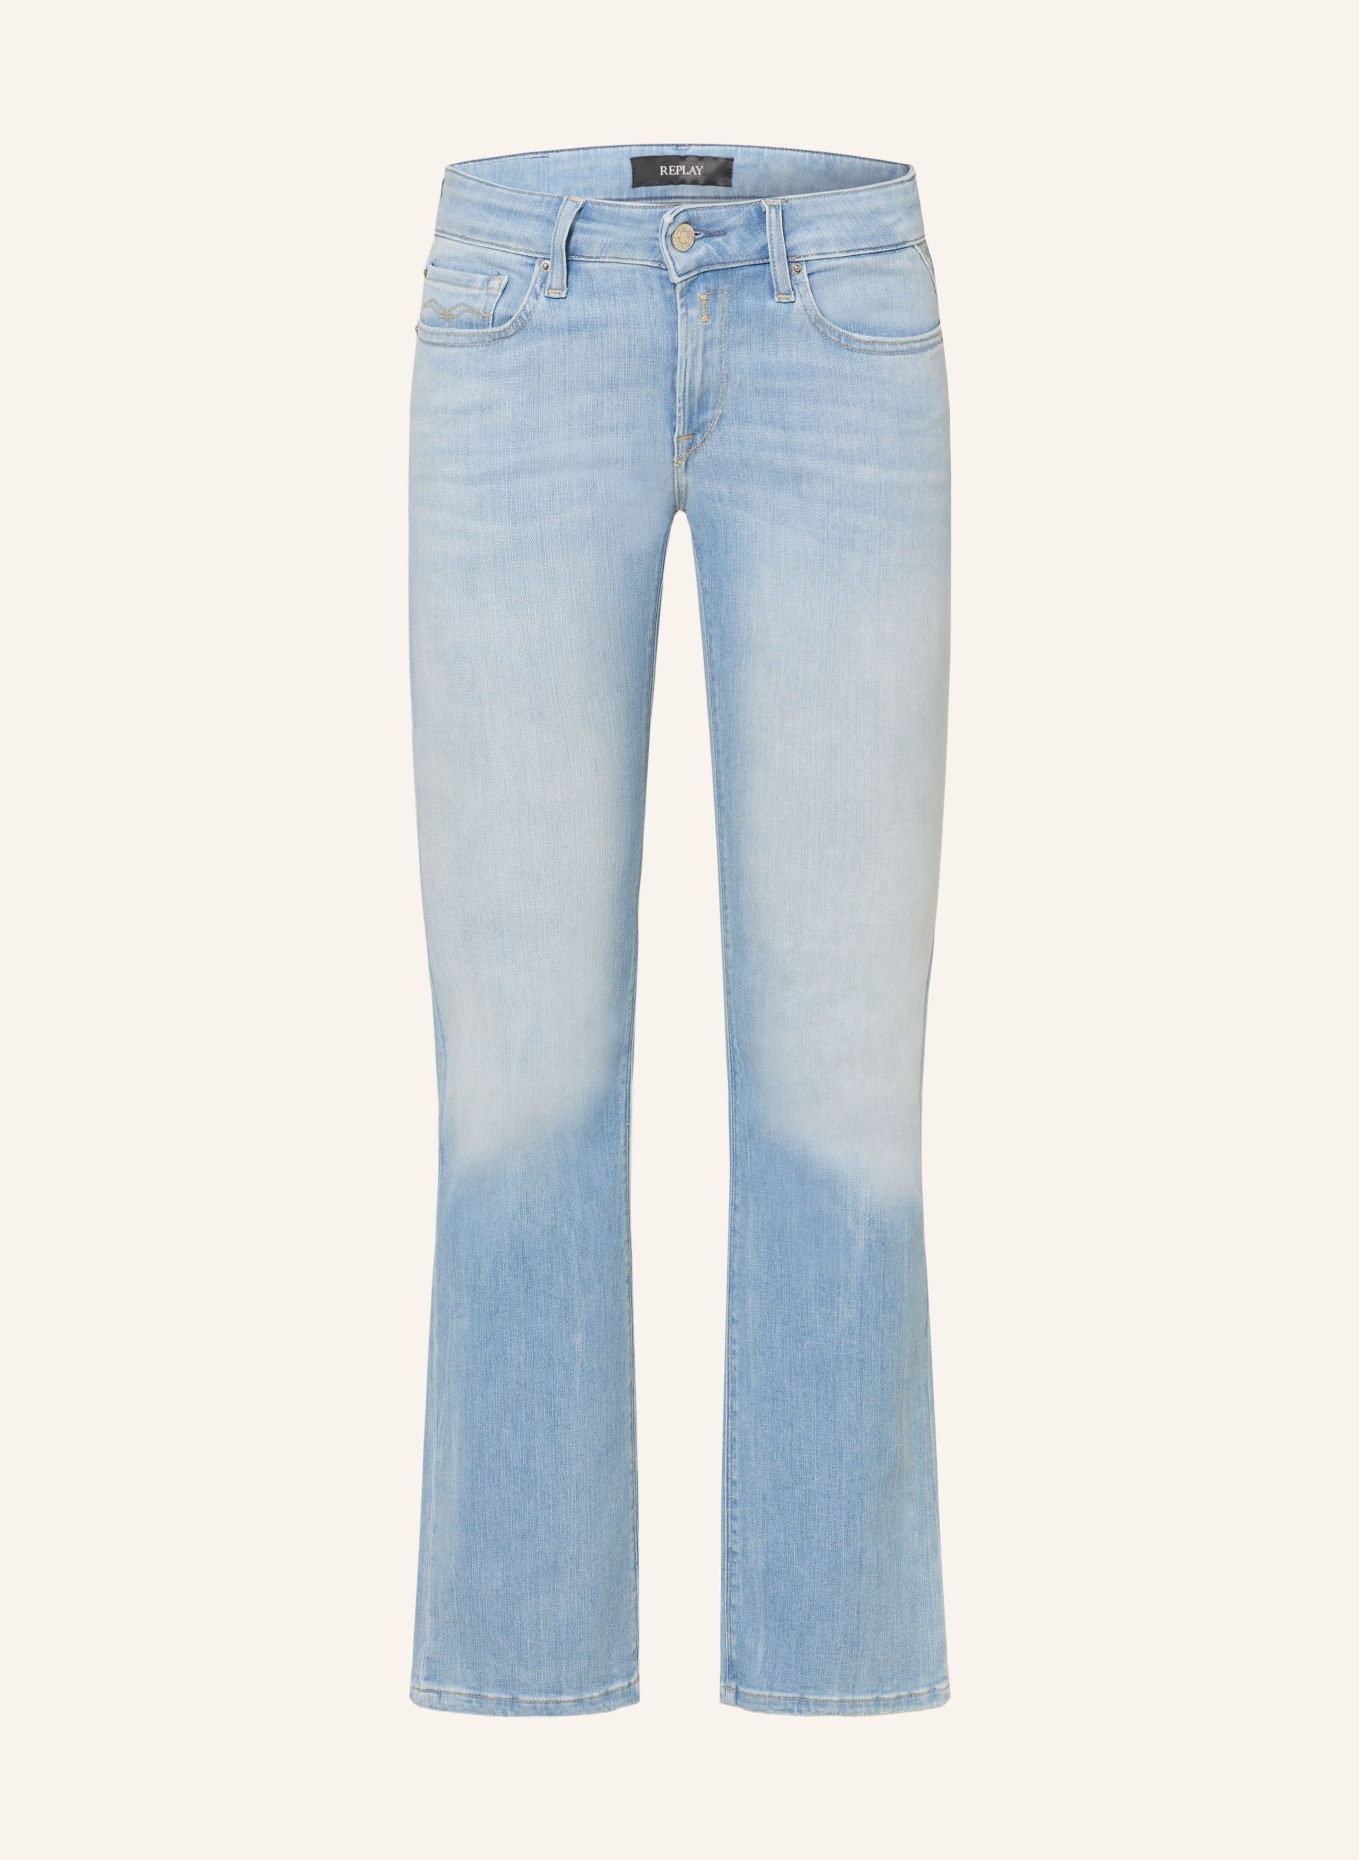 REPLAY Jeans NEW LUTZ, Farbe: 010 LIGHT BLUE (Bild 1)